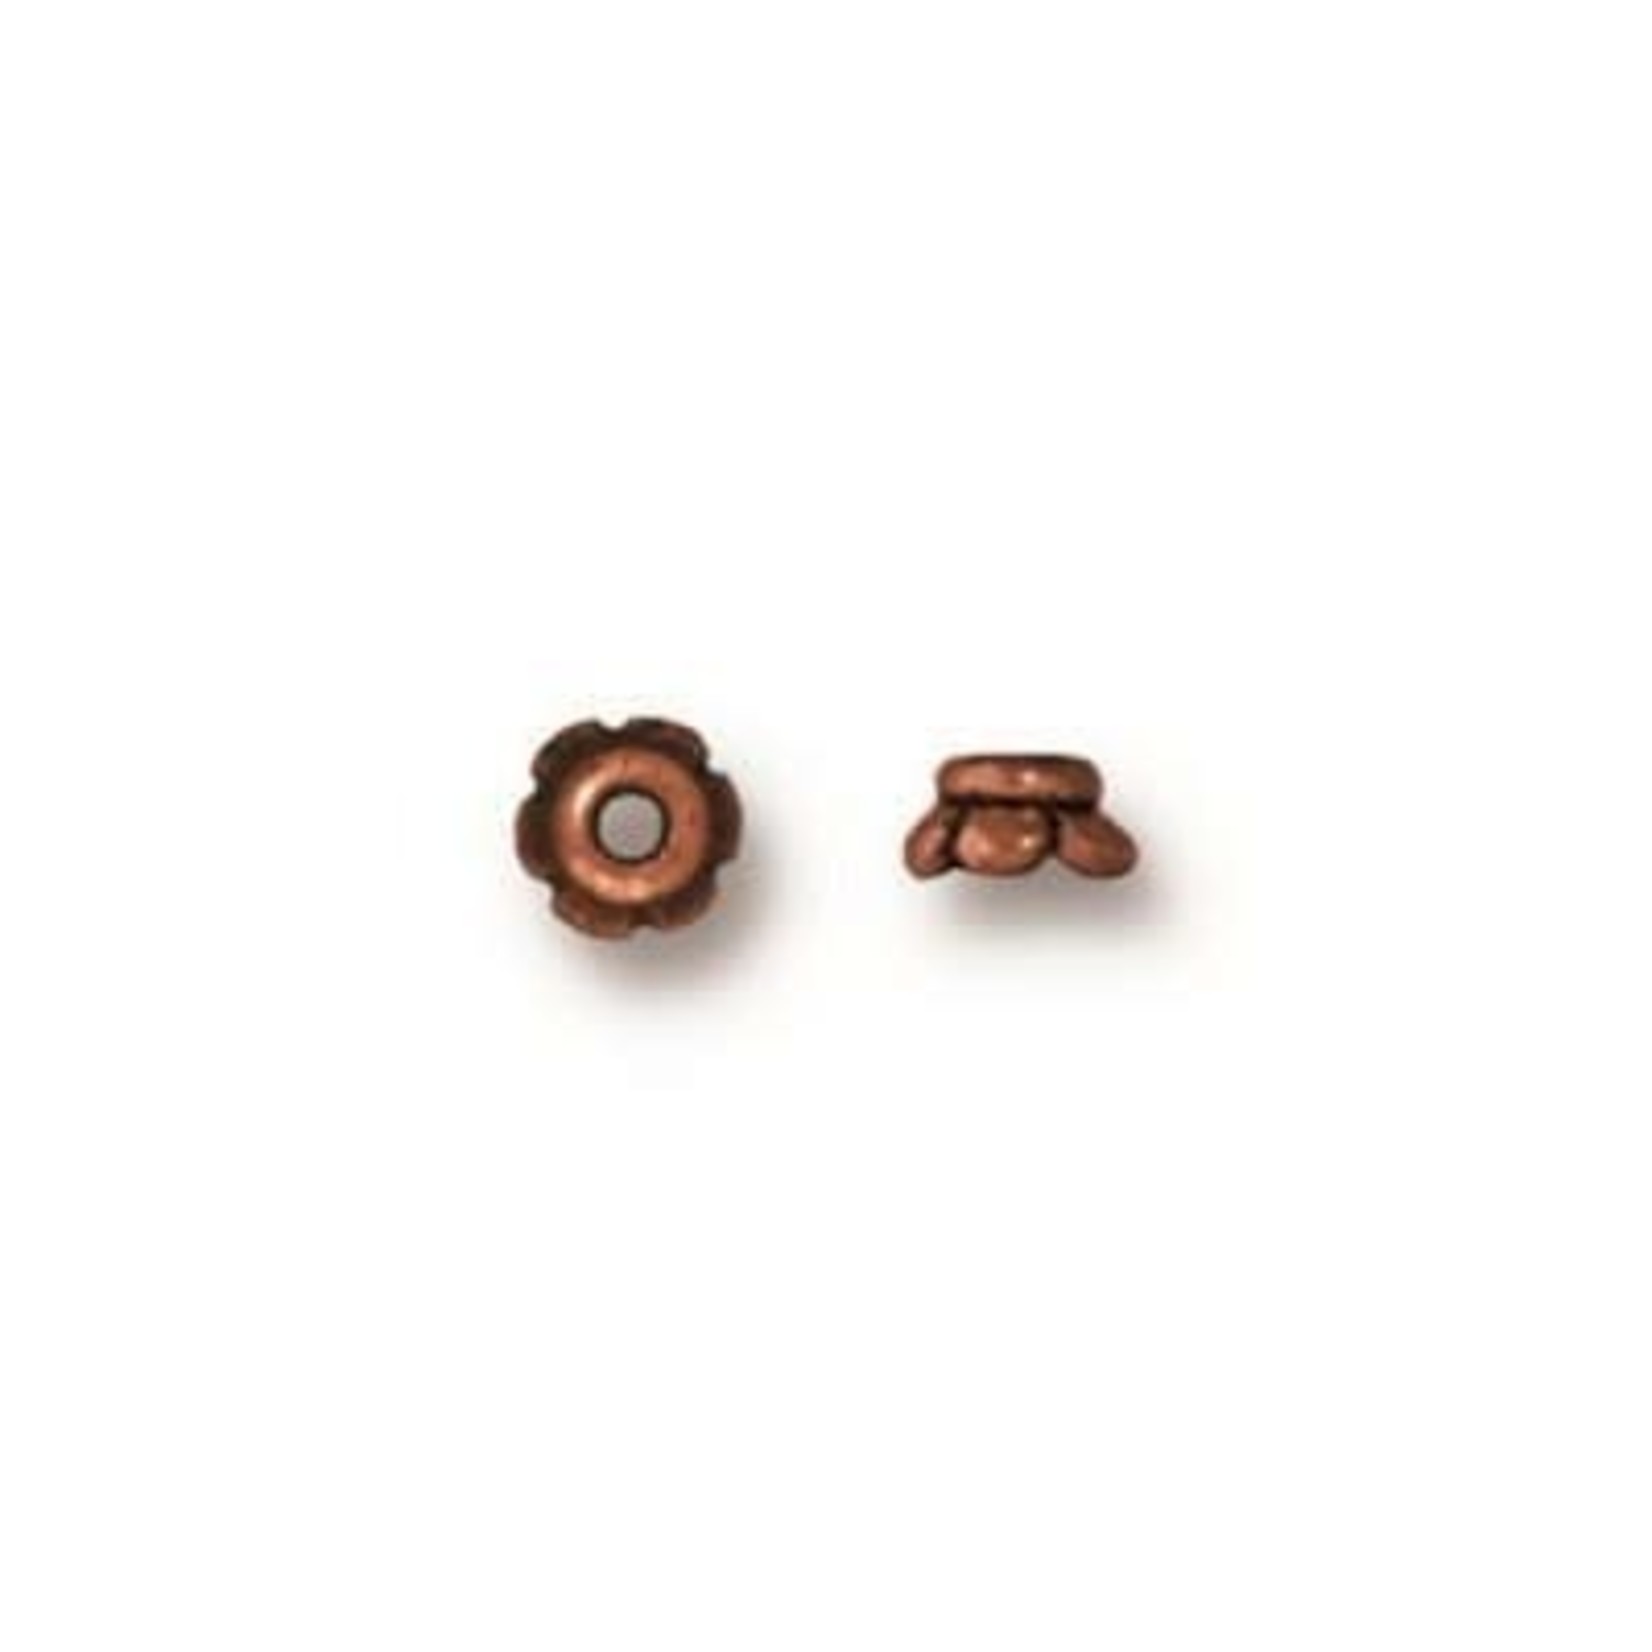 TierraCast Scalloped 4mm Bead Cap Antique Copper Plated - 20 pieces